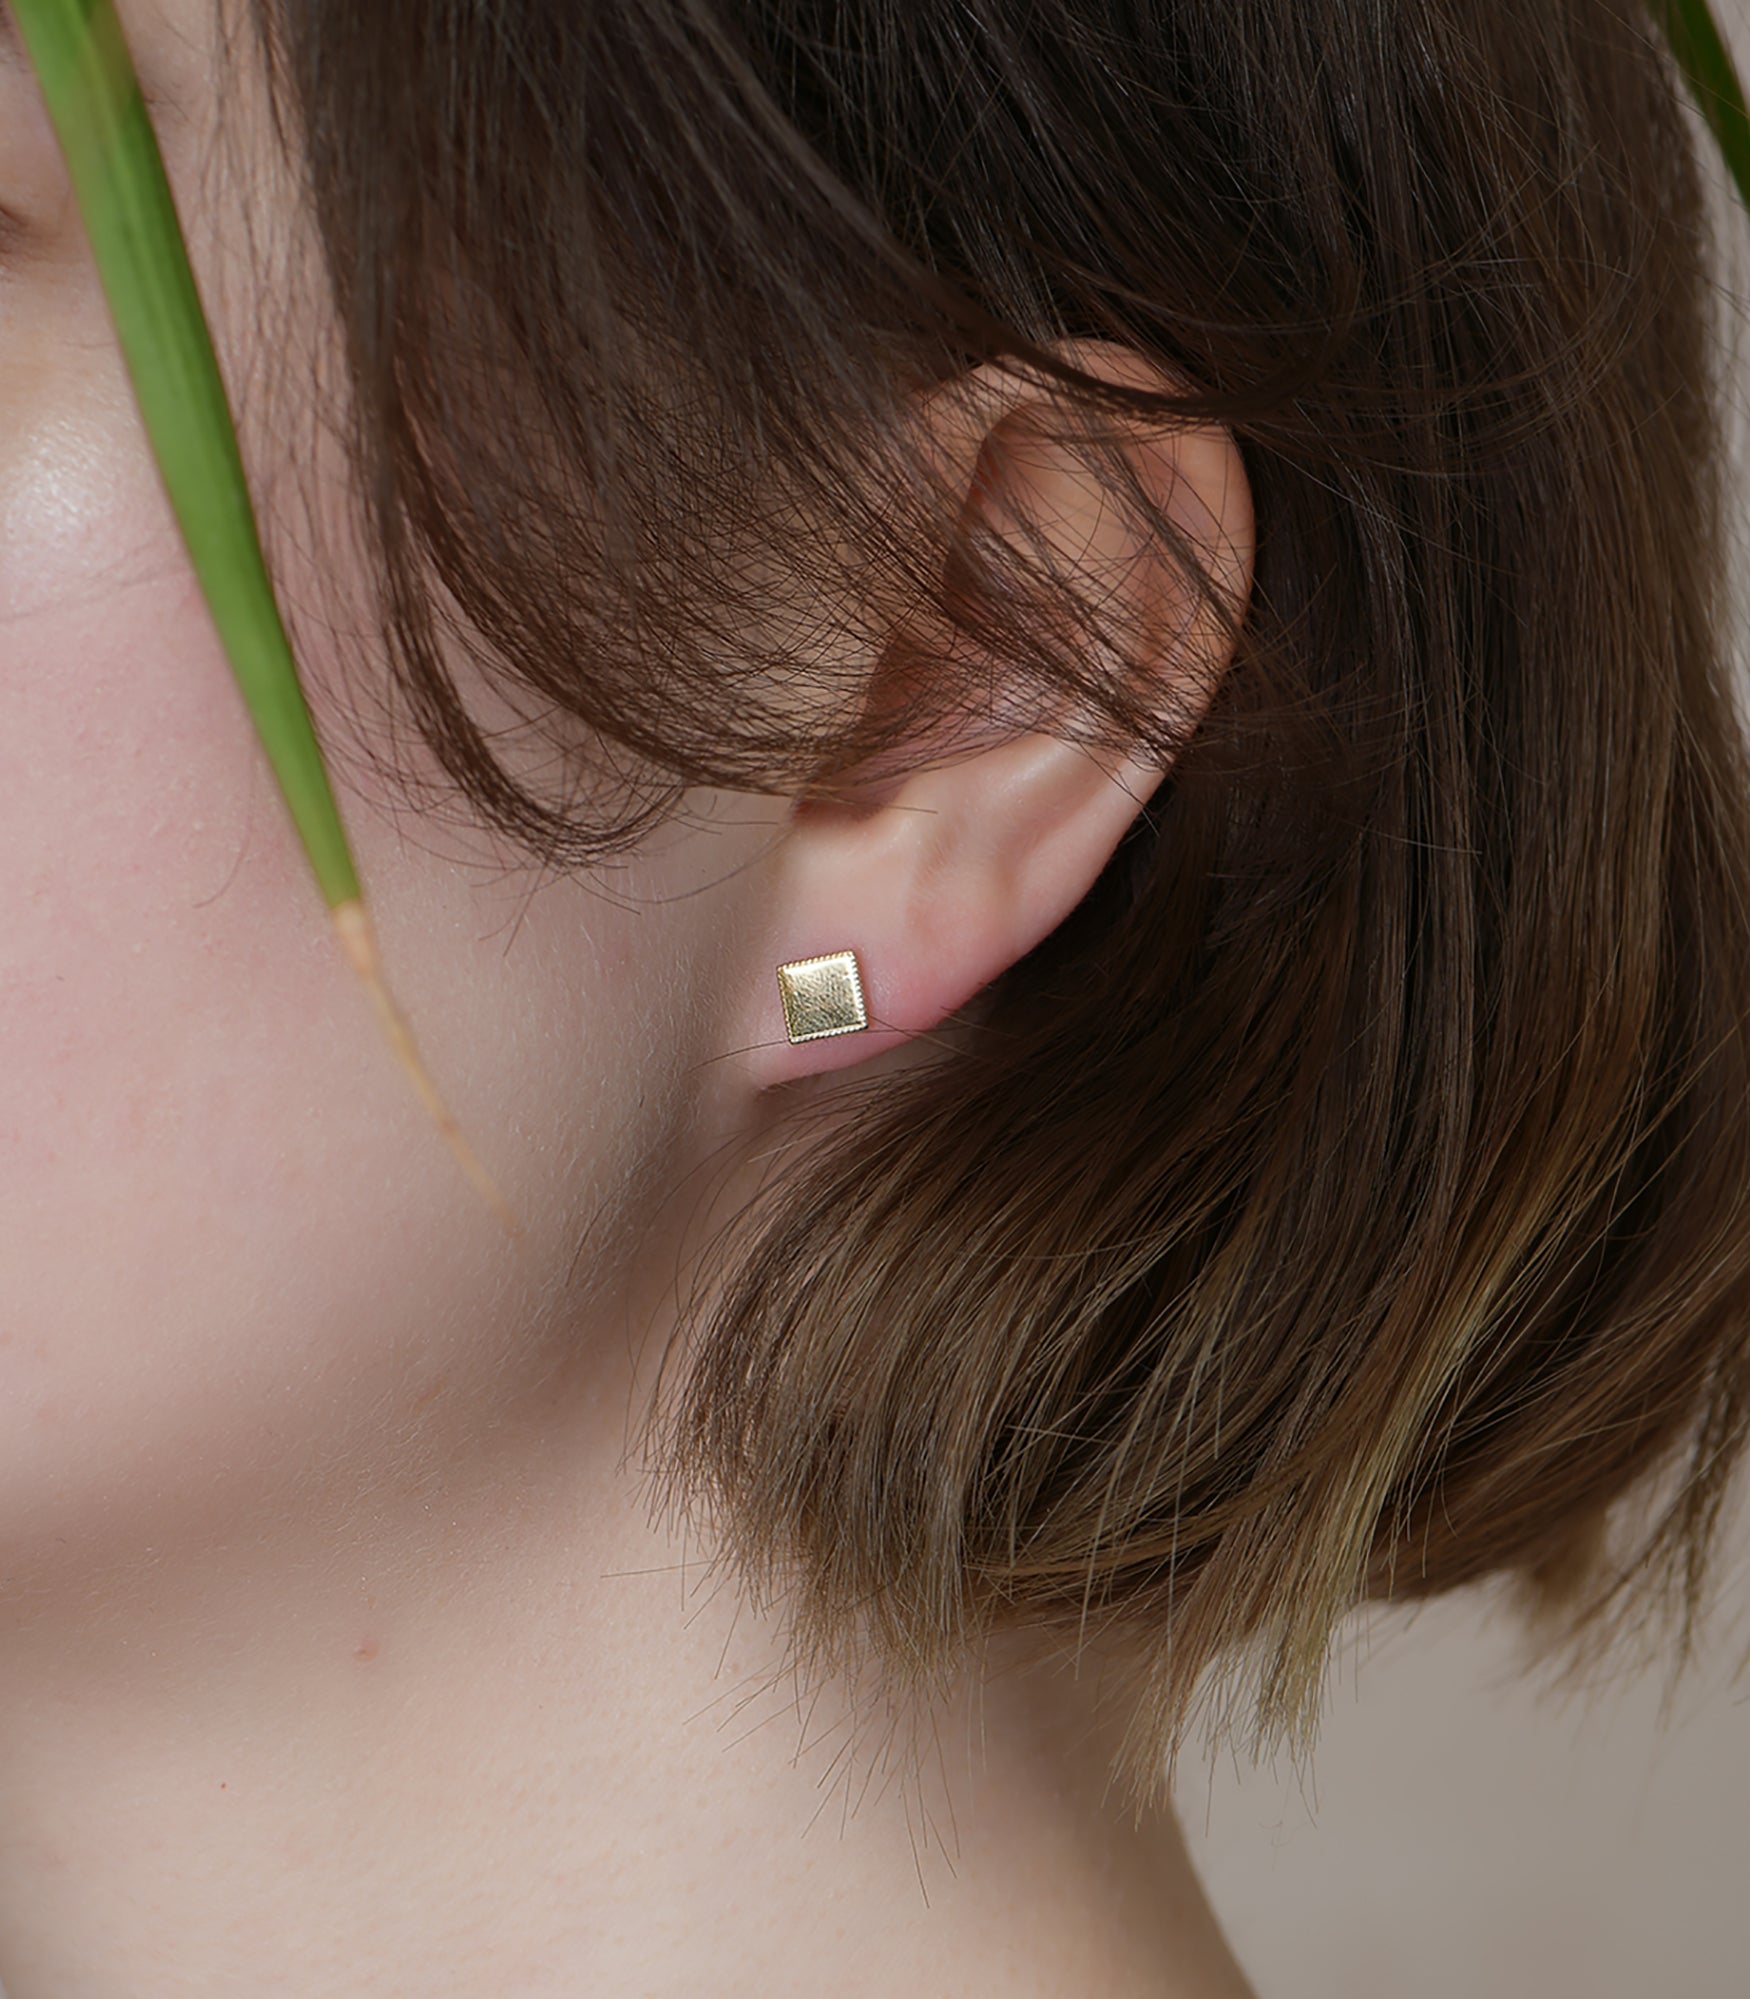 A model wears a gold vermeil, square shaped stud earring.